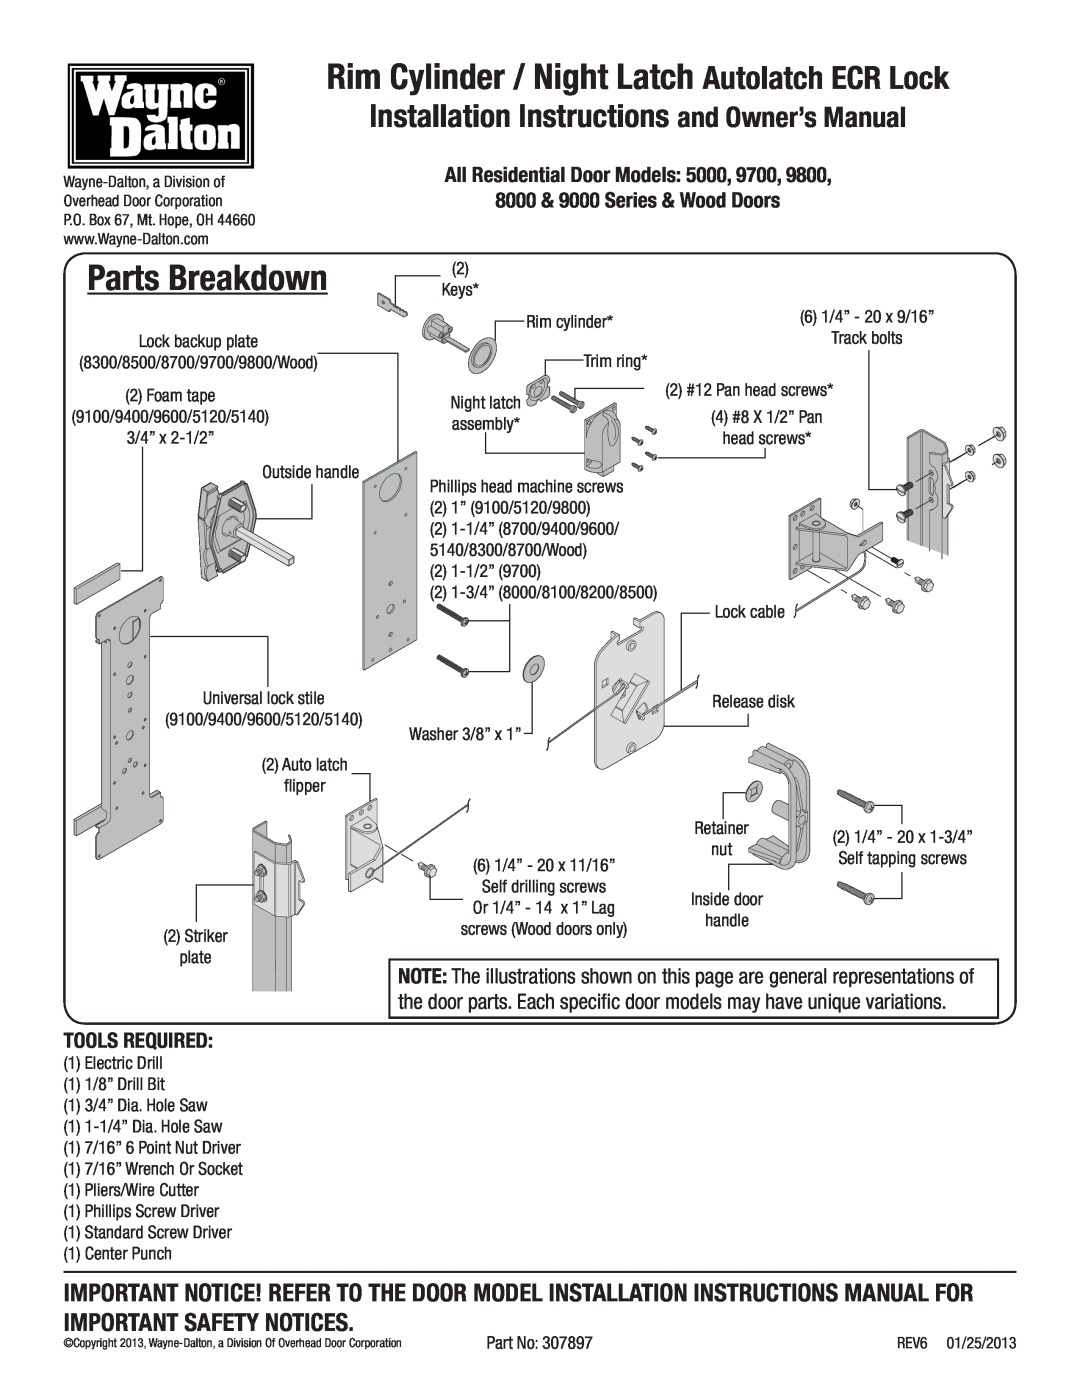 Wayne-Dalton 9000 installation instructions Important Safety Notices, Keyed-in-HandleAutolatch ECR Lock, Important Notice 